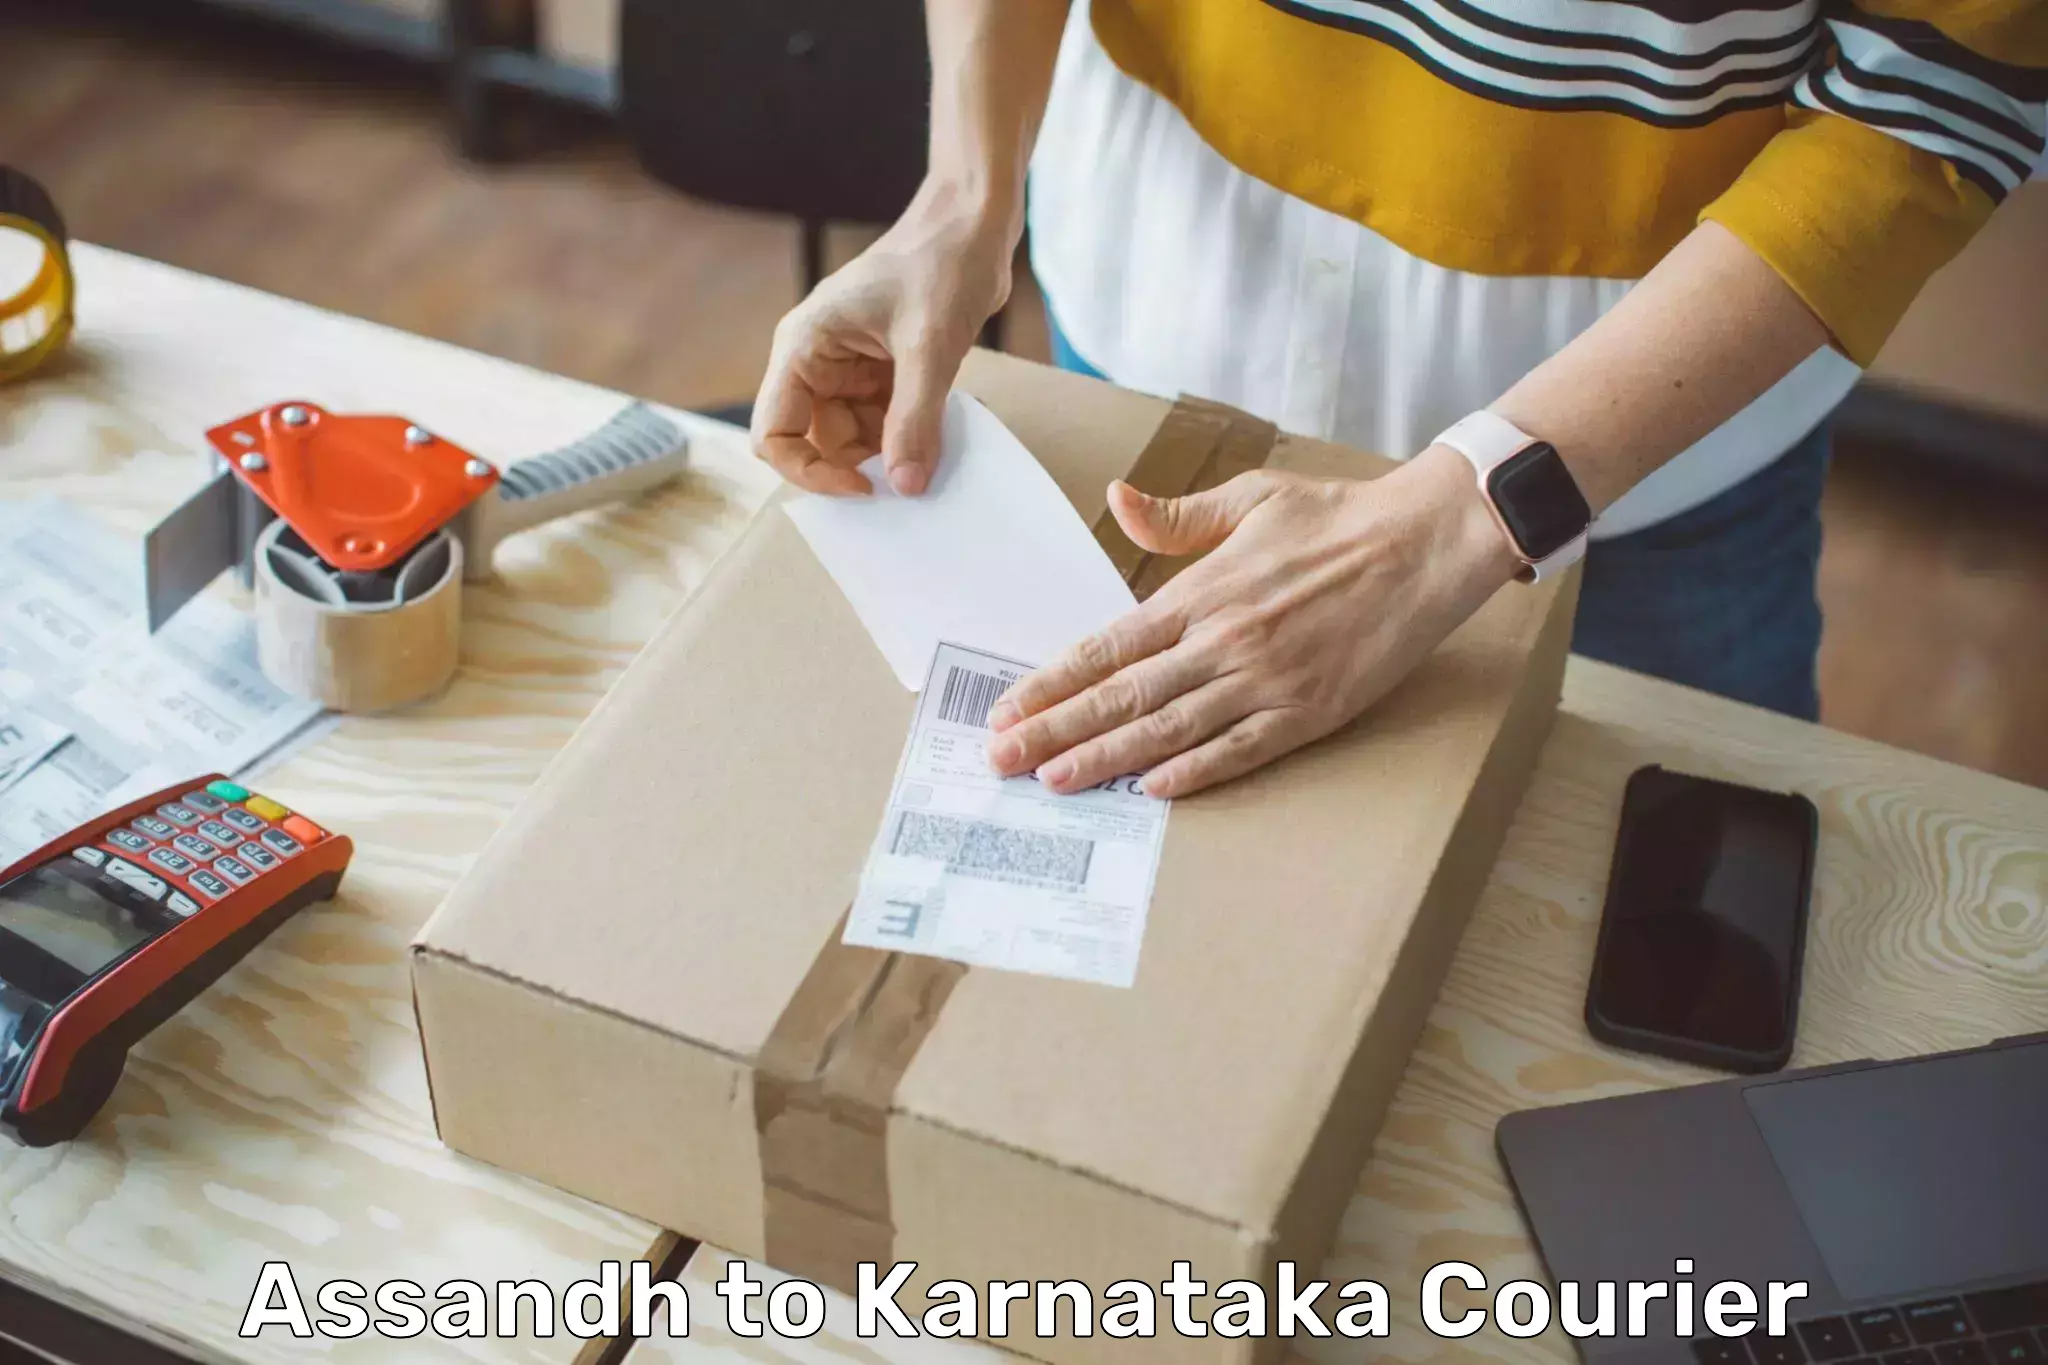 Courier app Assandh to Karnataka